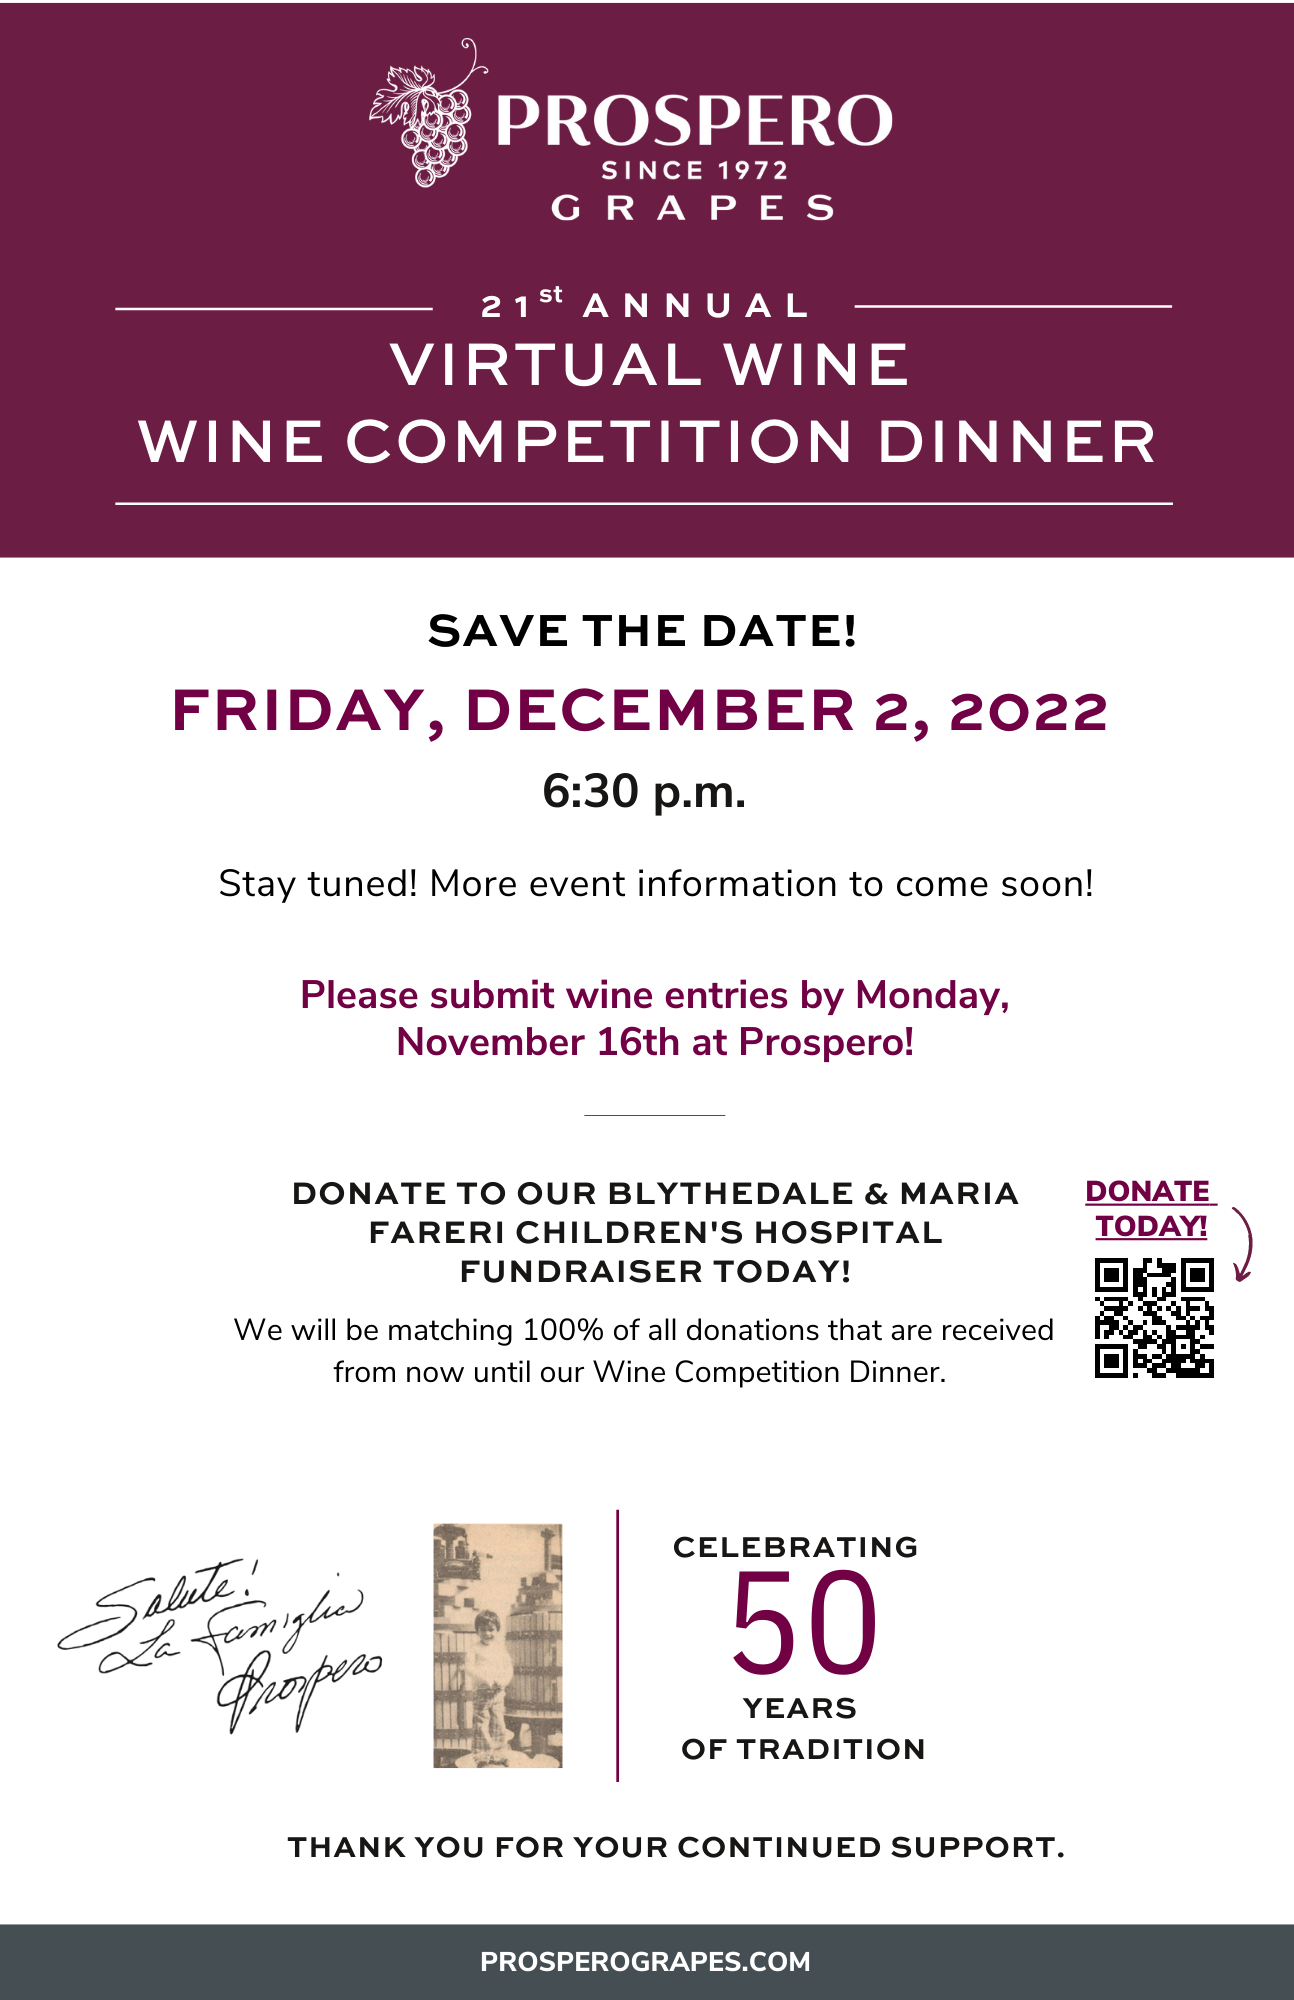 PROSP-21905 Wine Competition Dinner Invite (1).pdf (11 × 17 in)